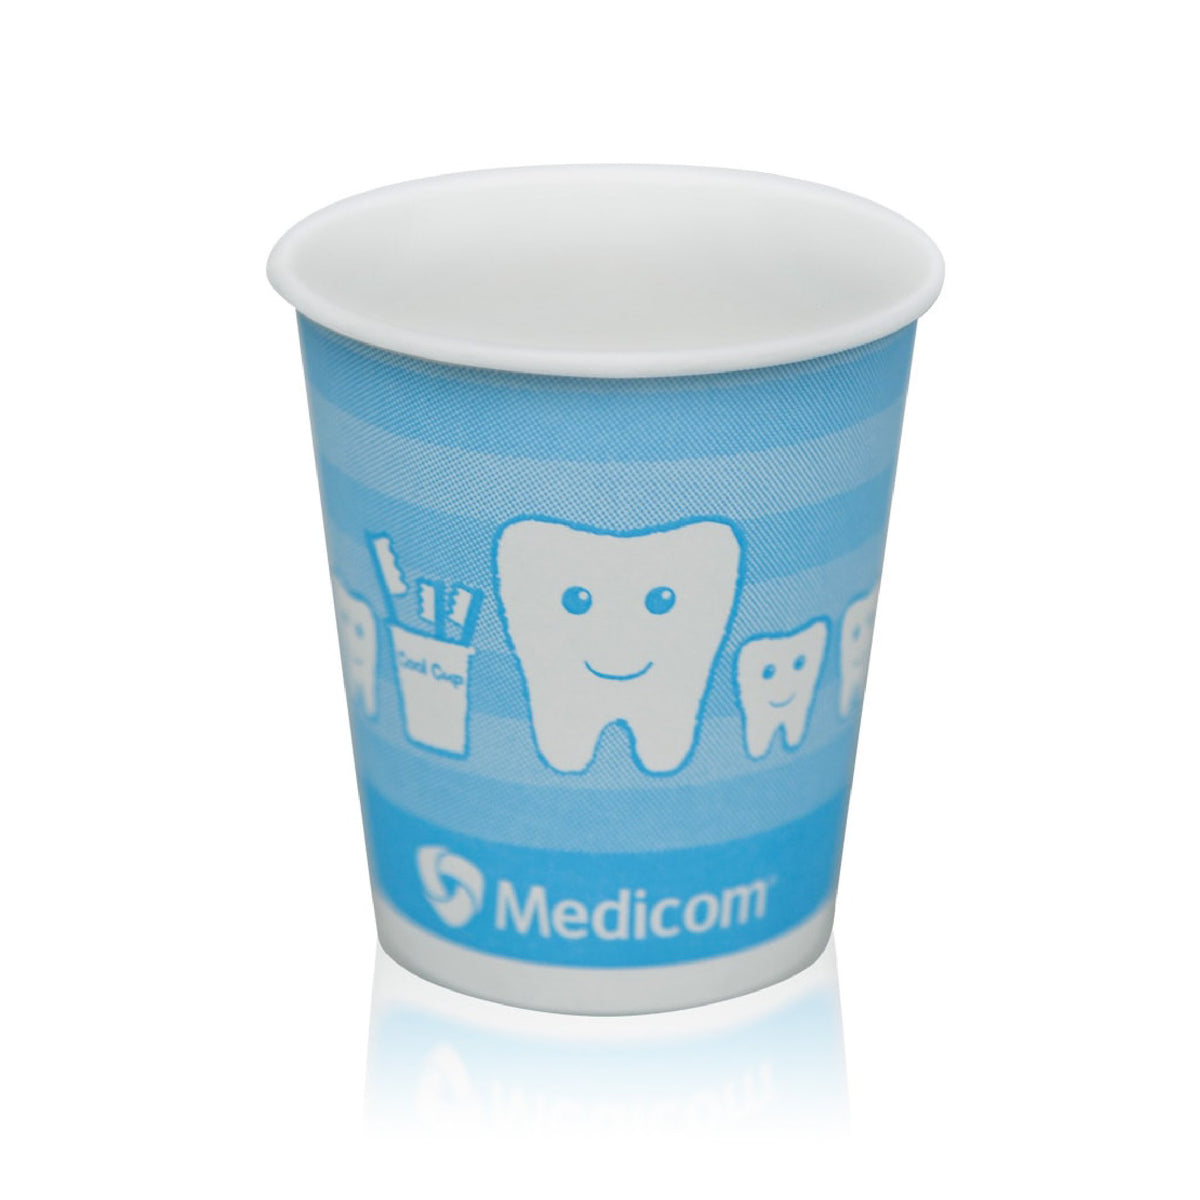 Medicom Paper Cup 5oz Blue 100/Sleeve